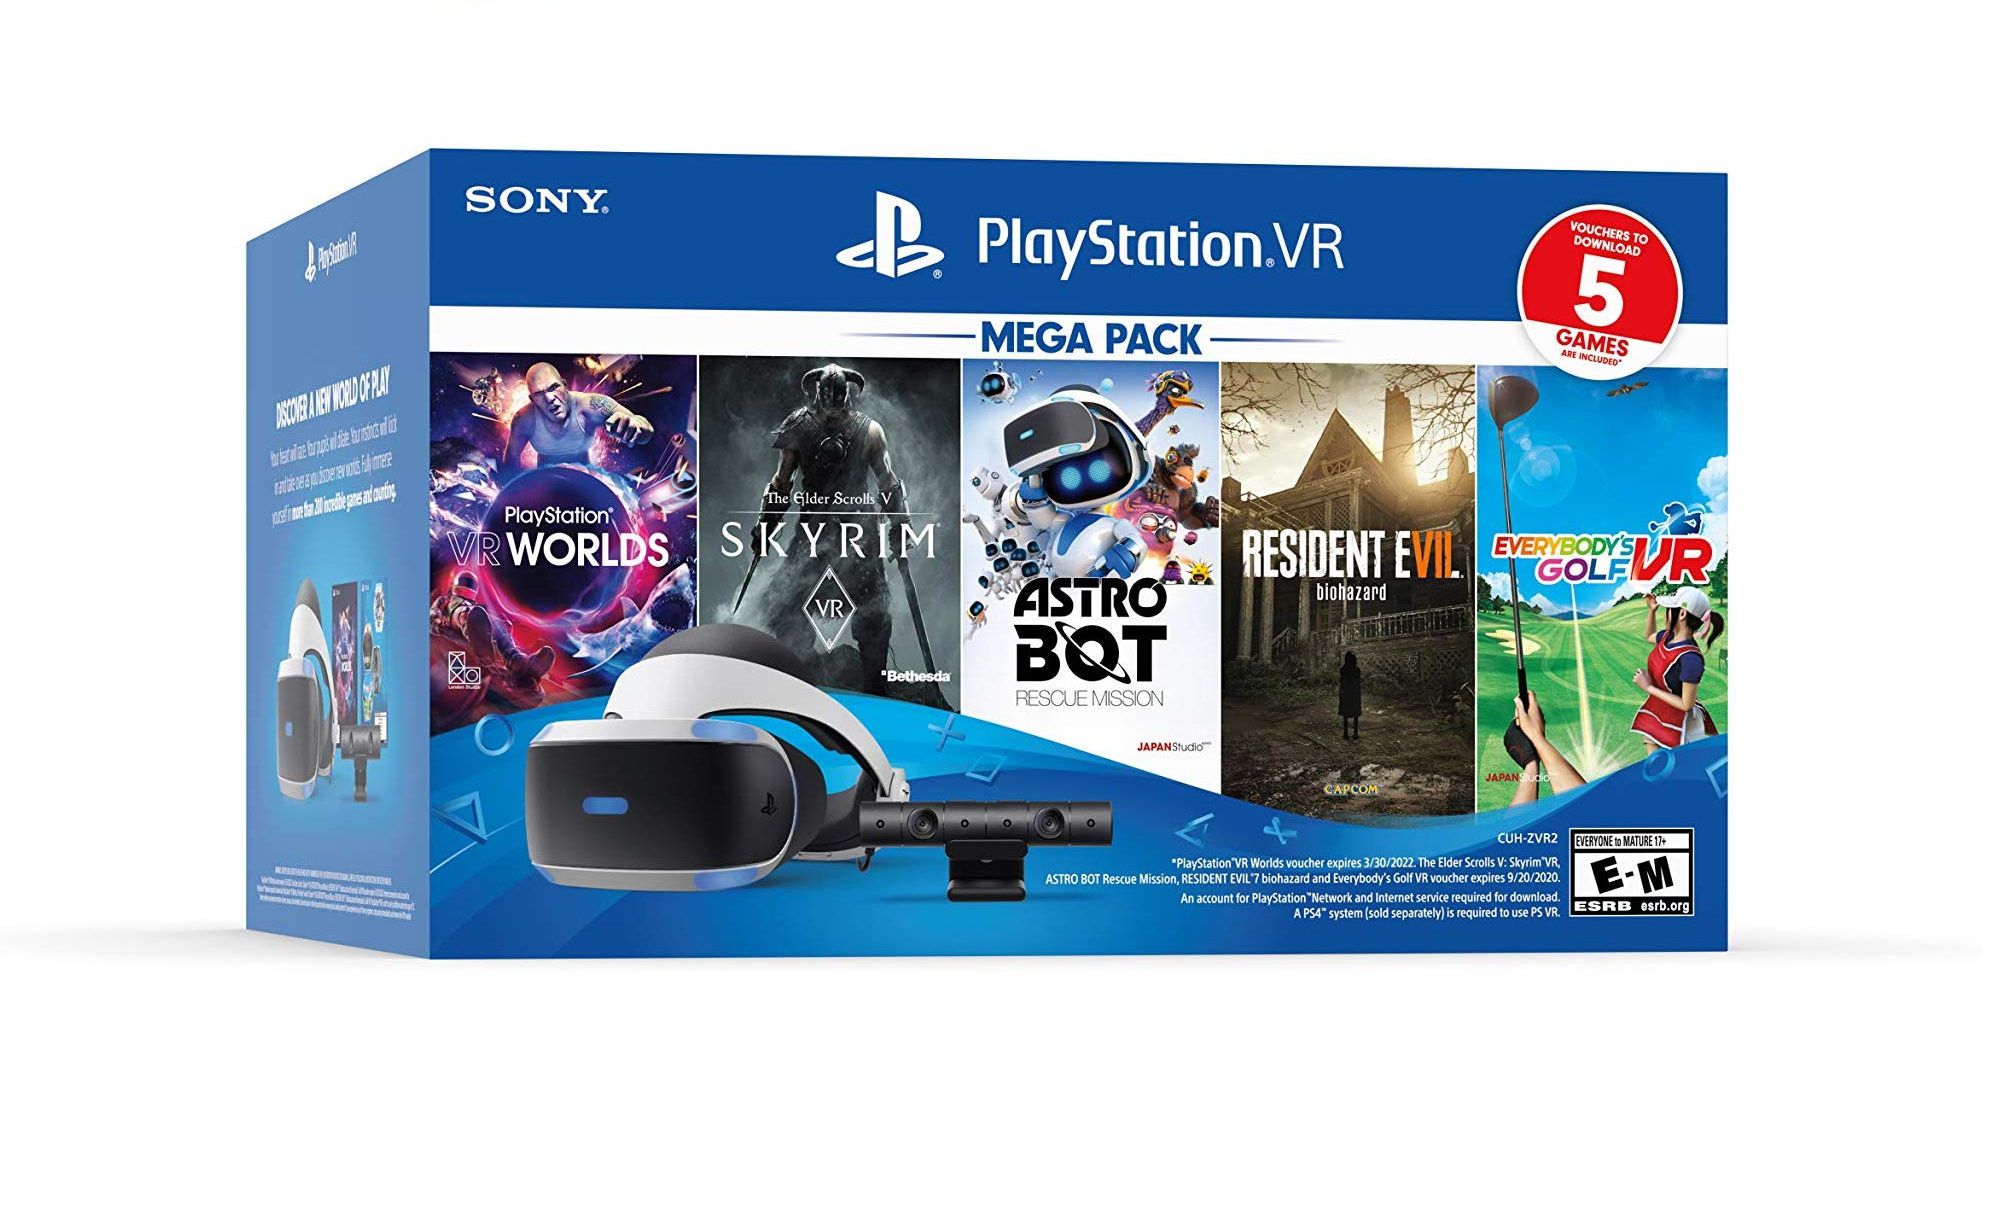 Drops VR - 4 Novos Jogos anunciados para o Playstation VR 2 